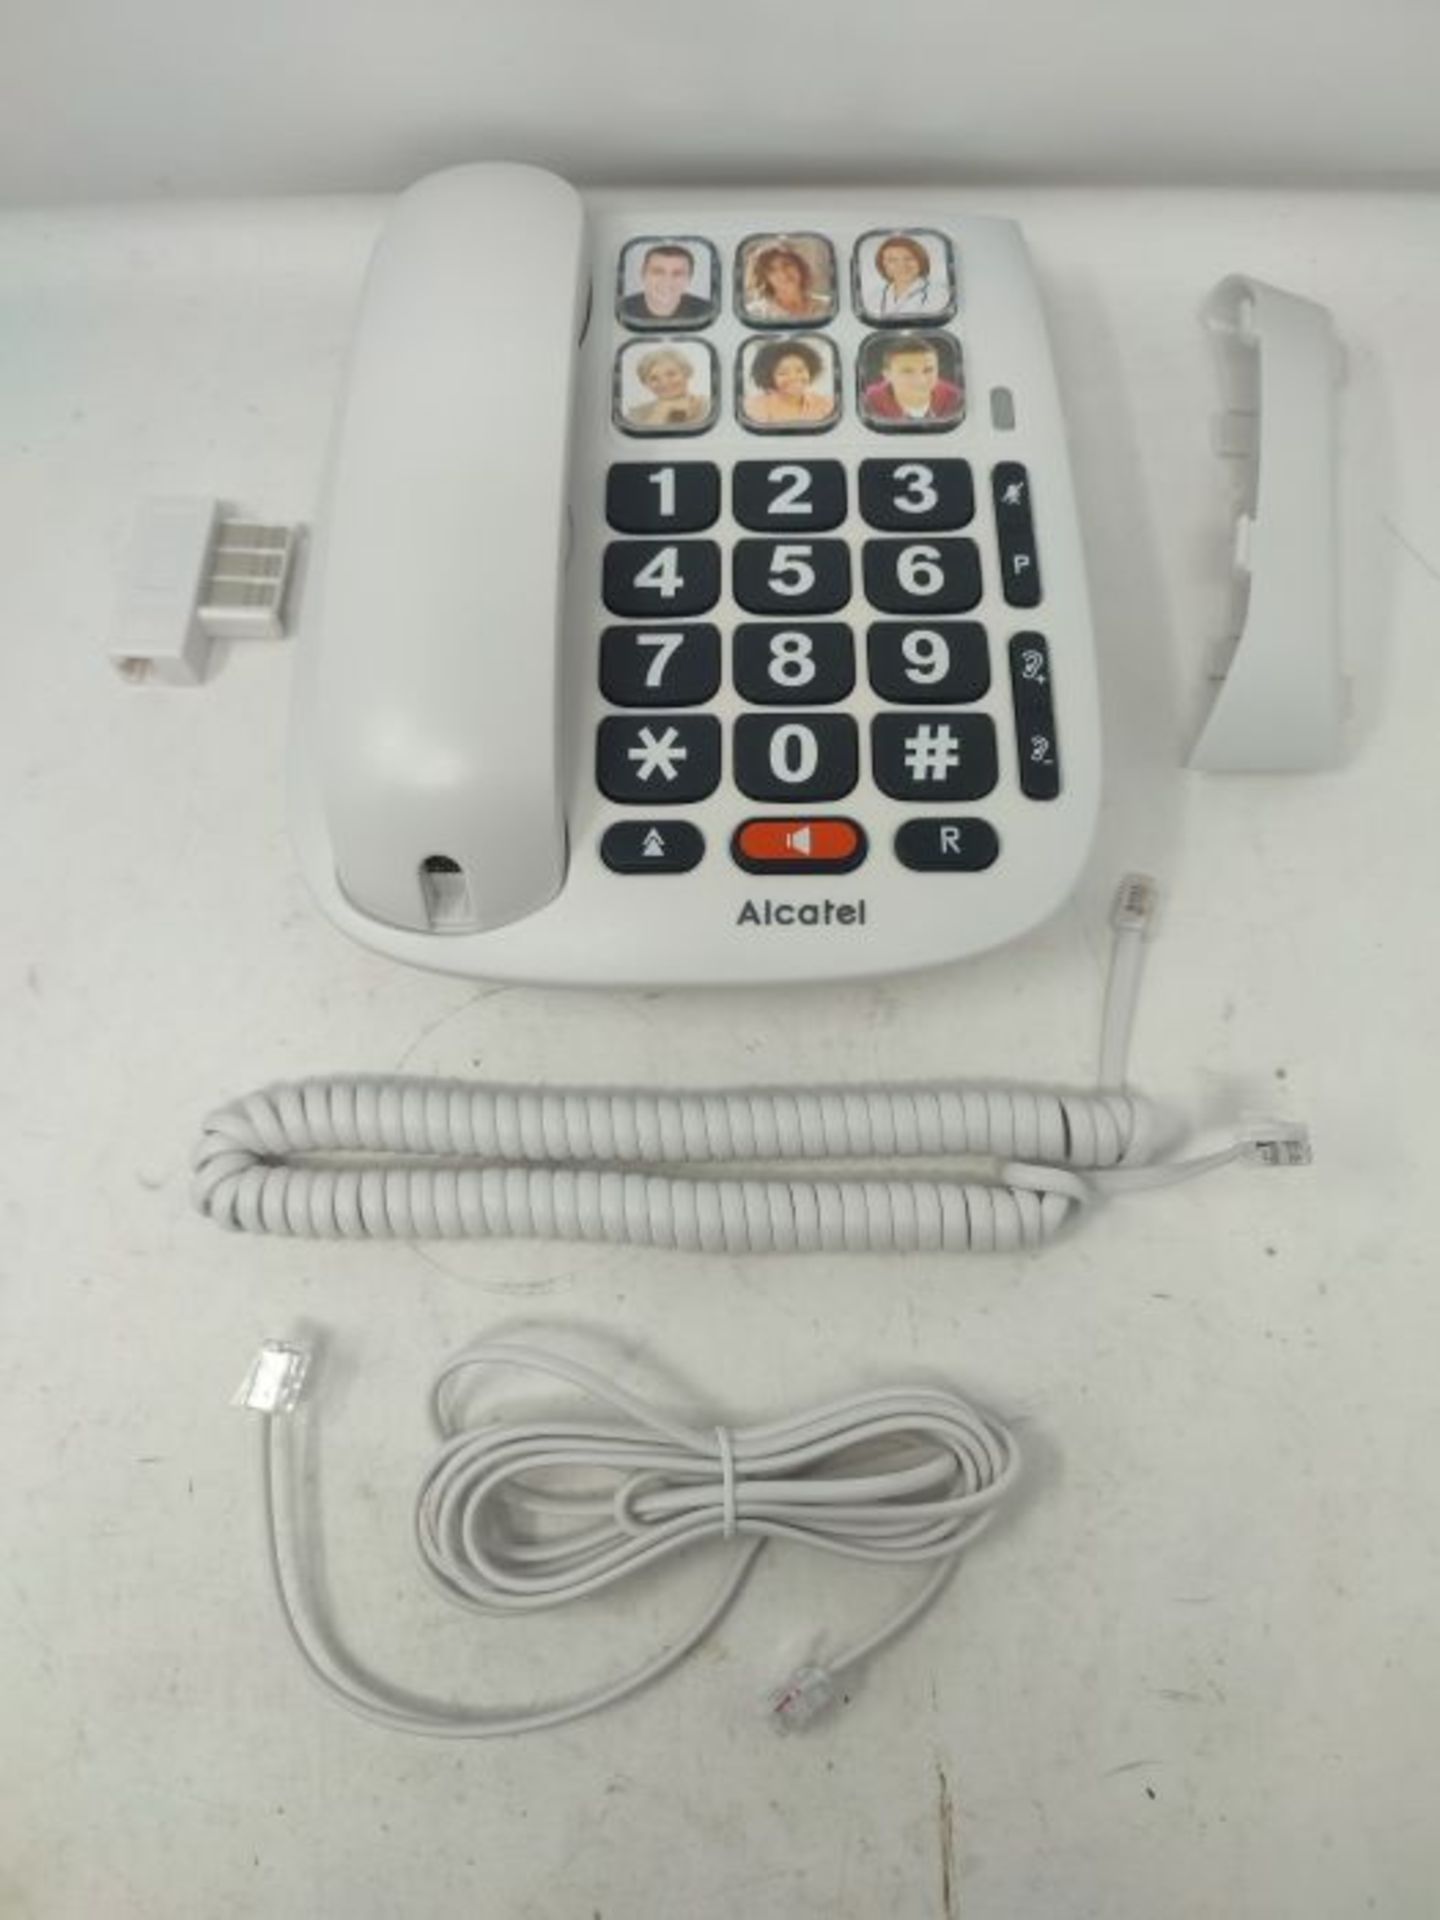 Alcatel Max 10 Corded Phone for Seniors White. - Image 6 of 6